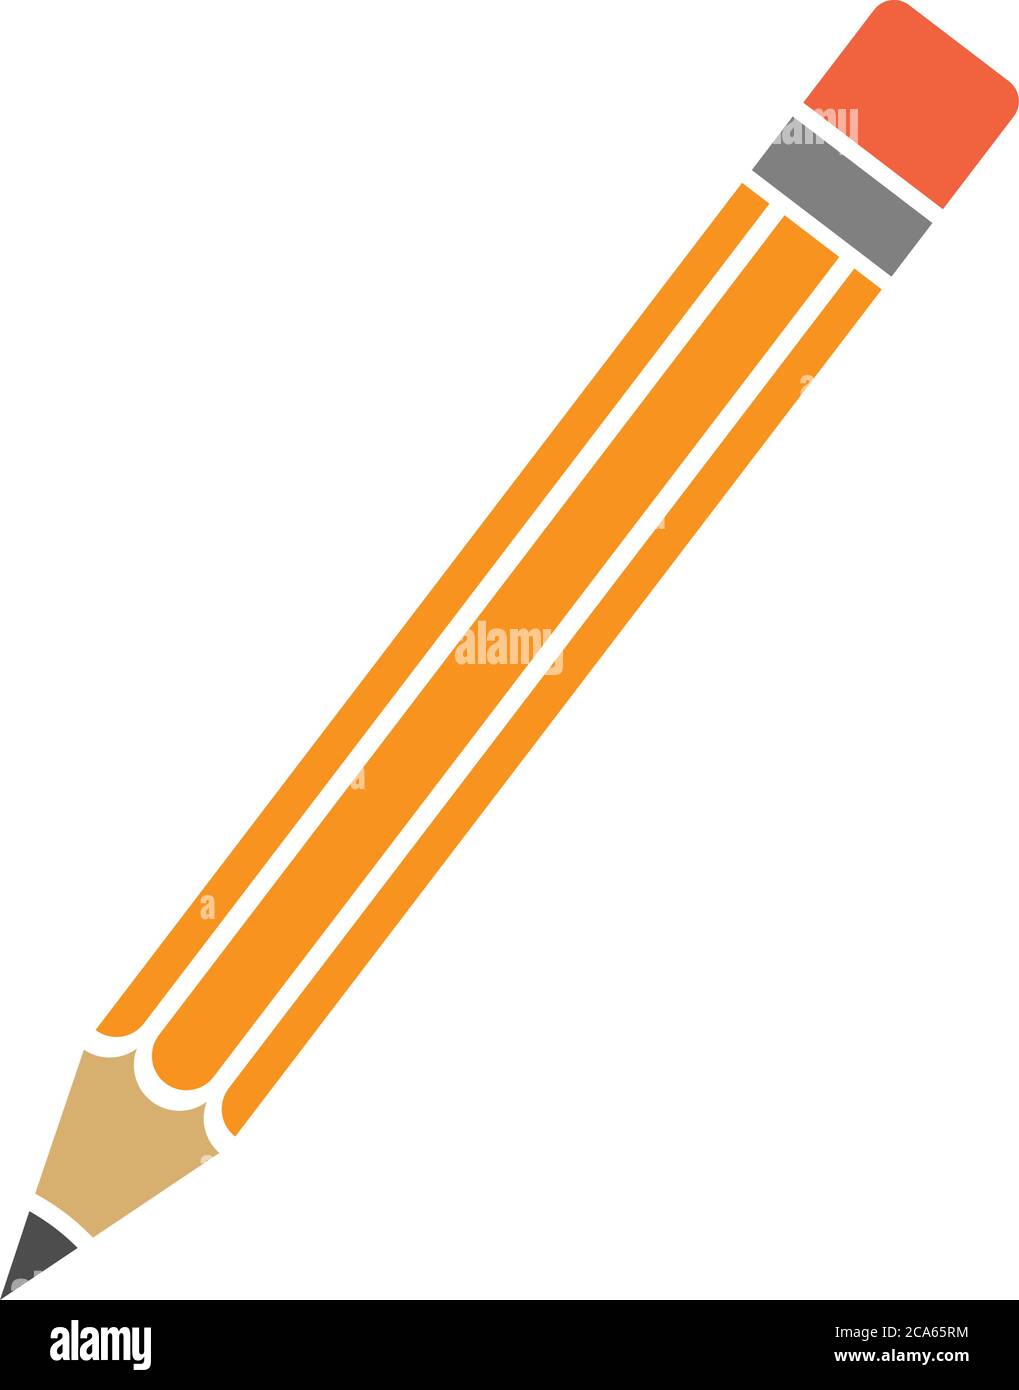 Orangefarbener Bleistift mit Radiergummi-Symbol oder Symbolvektordarstellung Stock Vektor